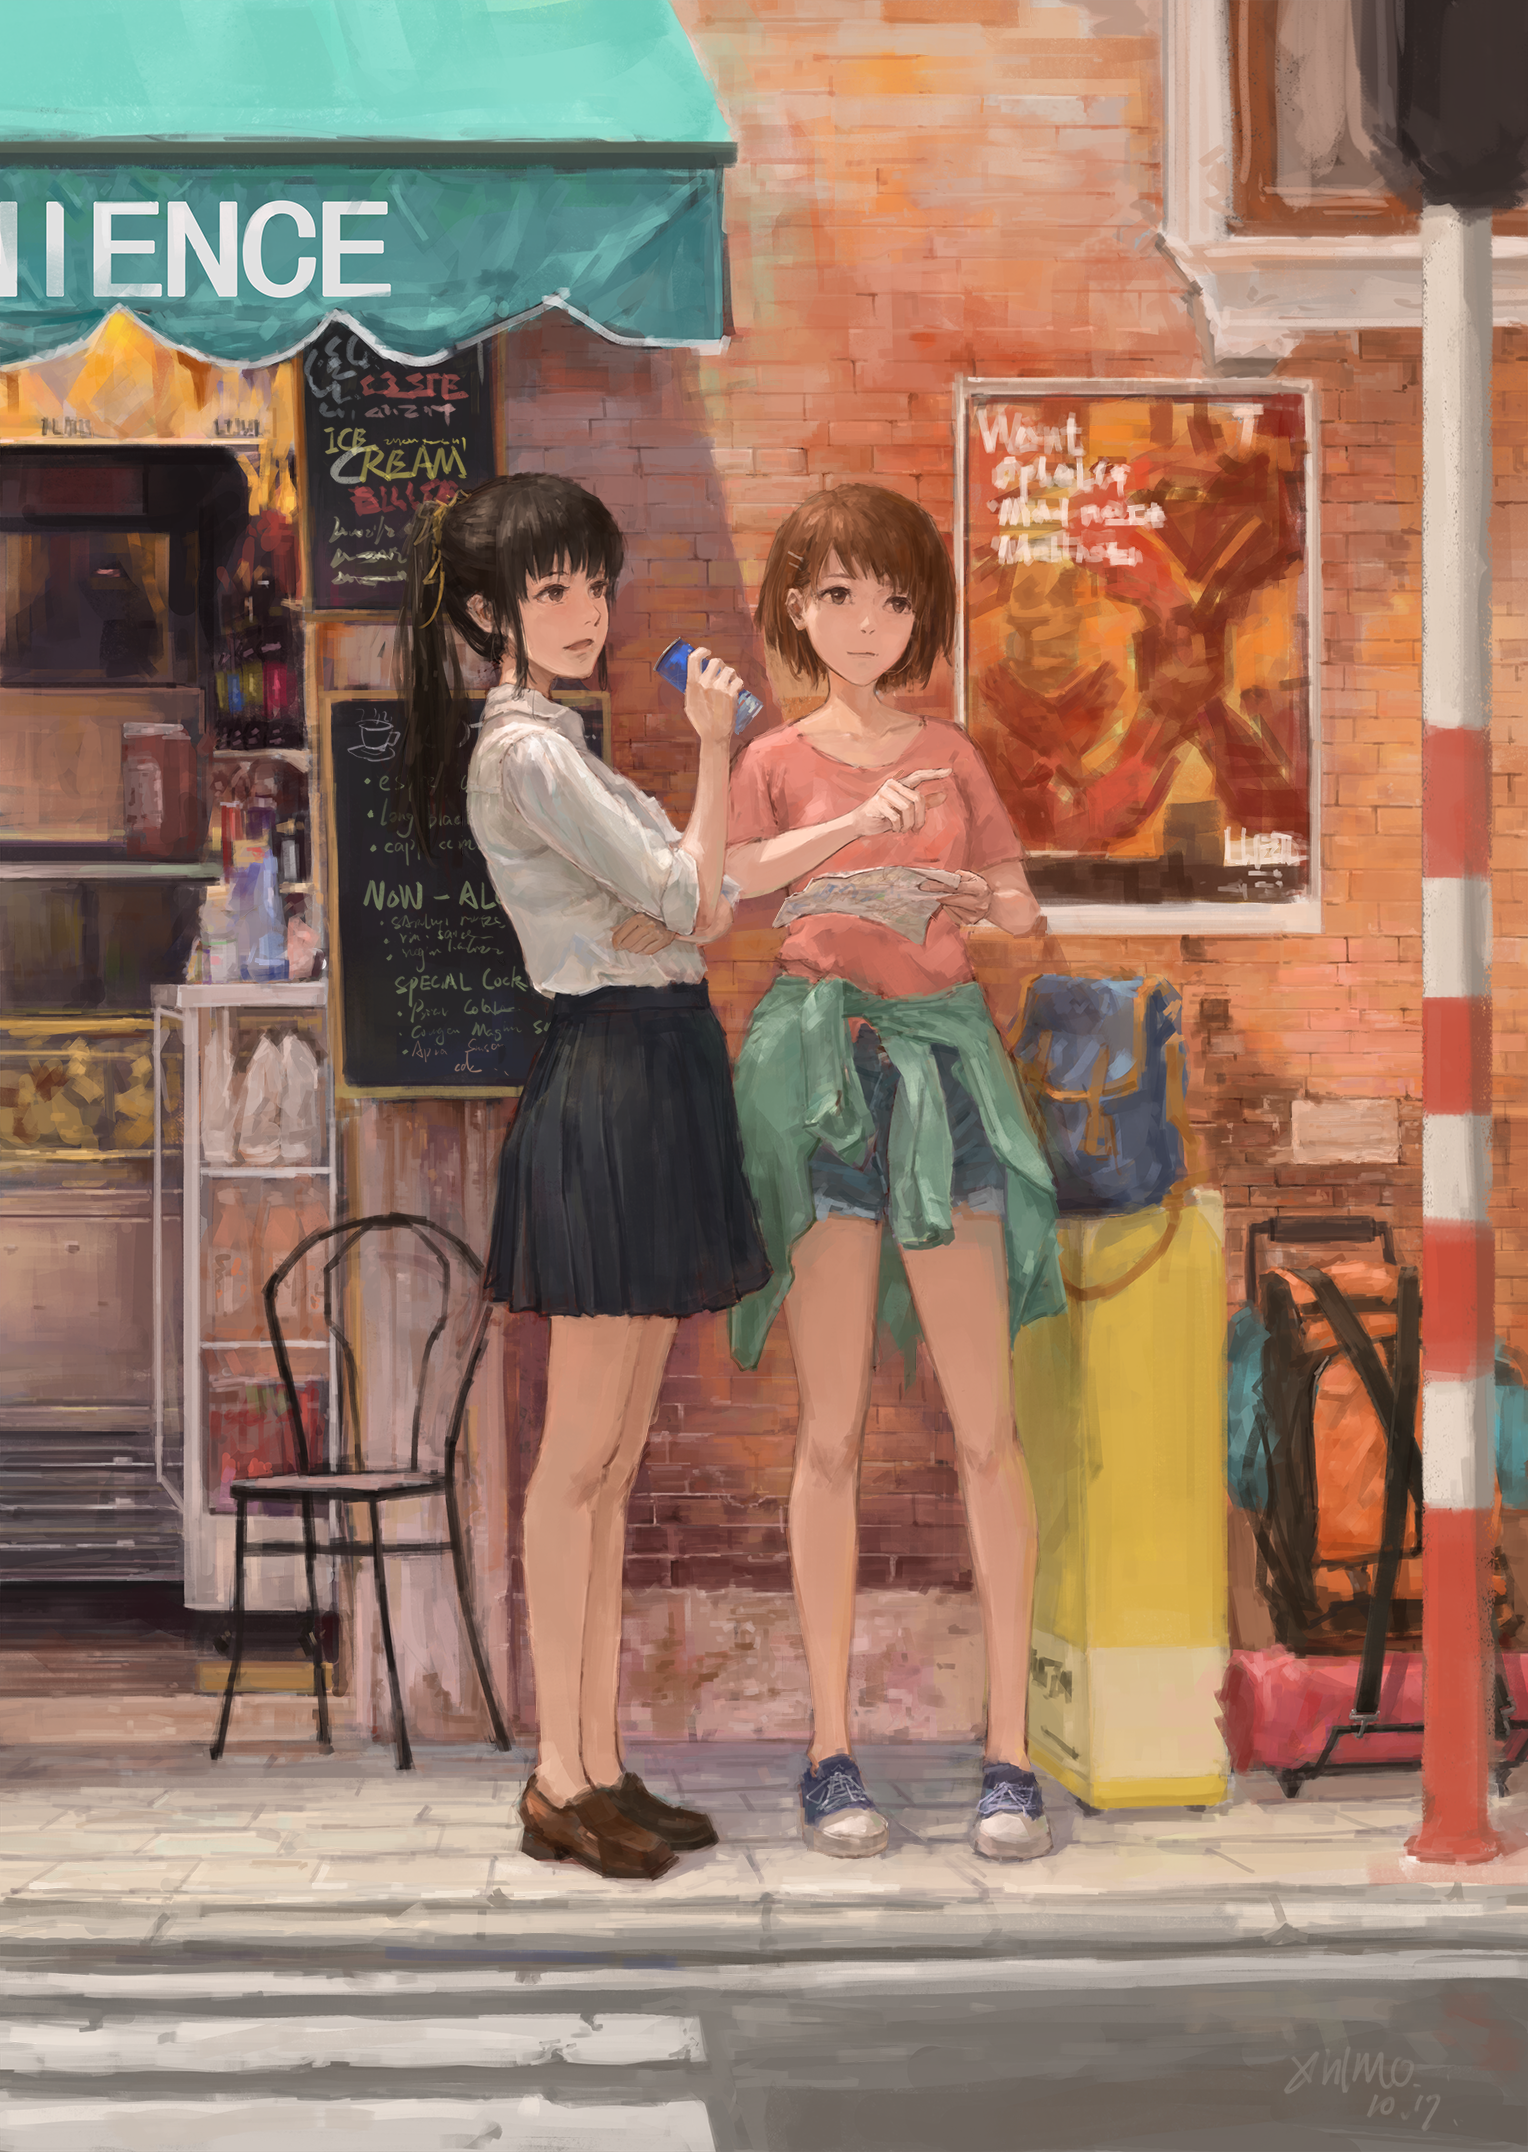 Anime 1528x2152 XilmO anime girls anime chair women two women street urban women outdoors outdoors standing